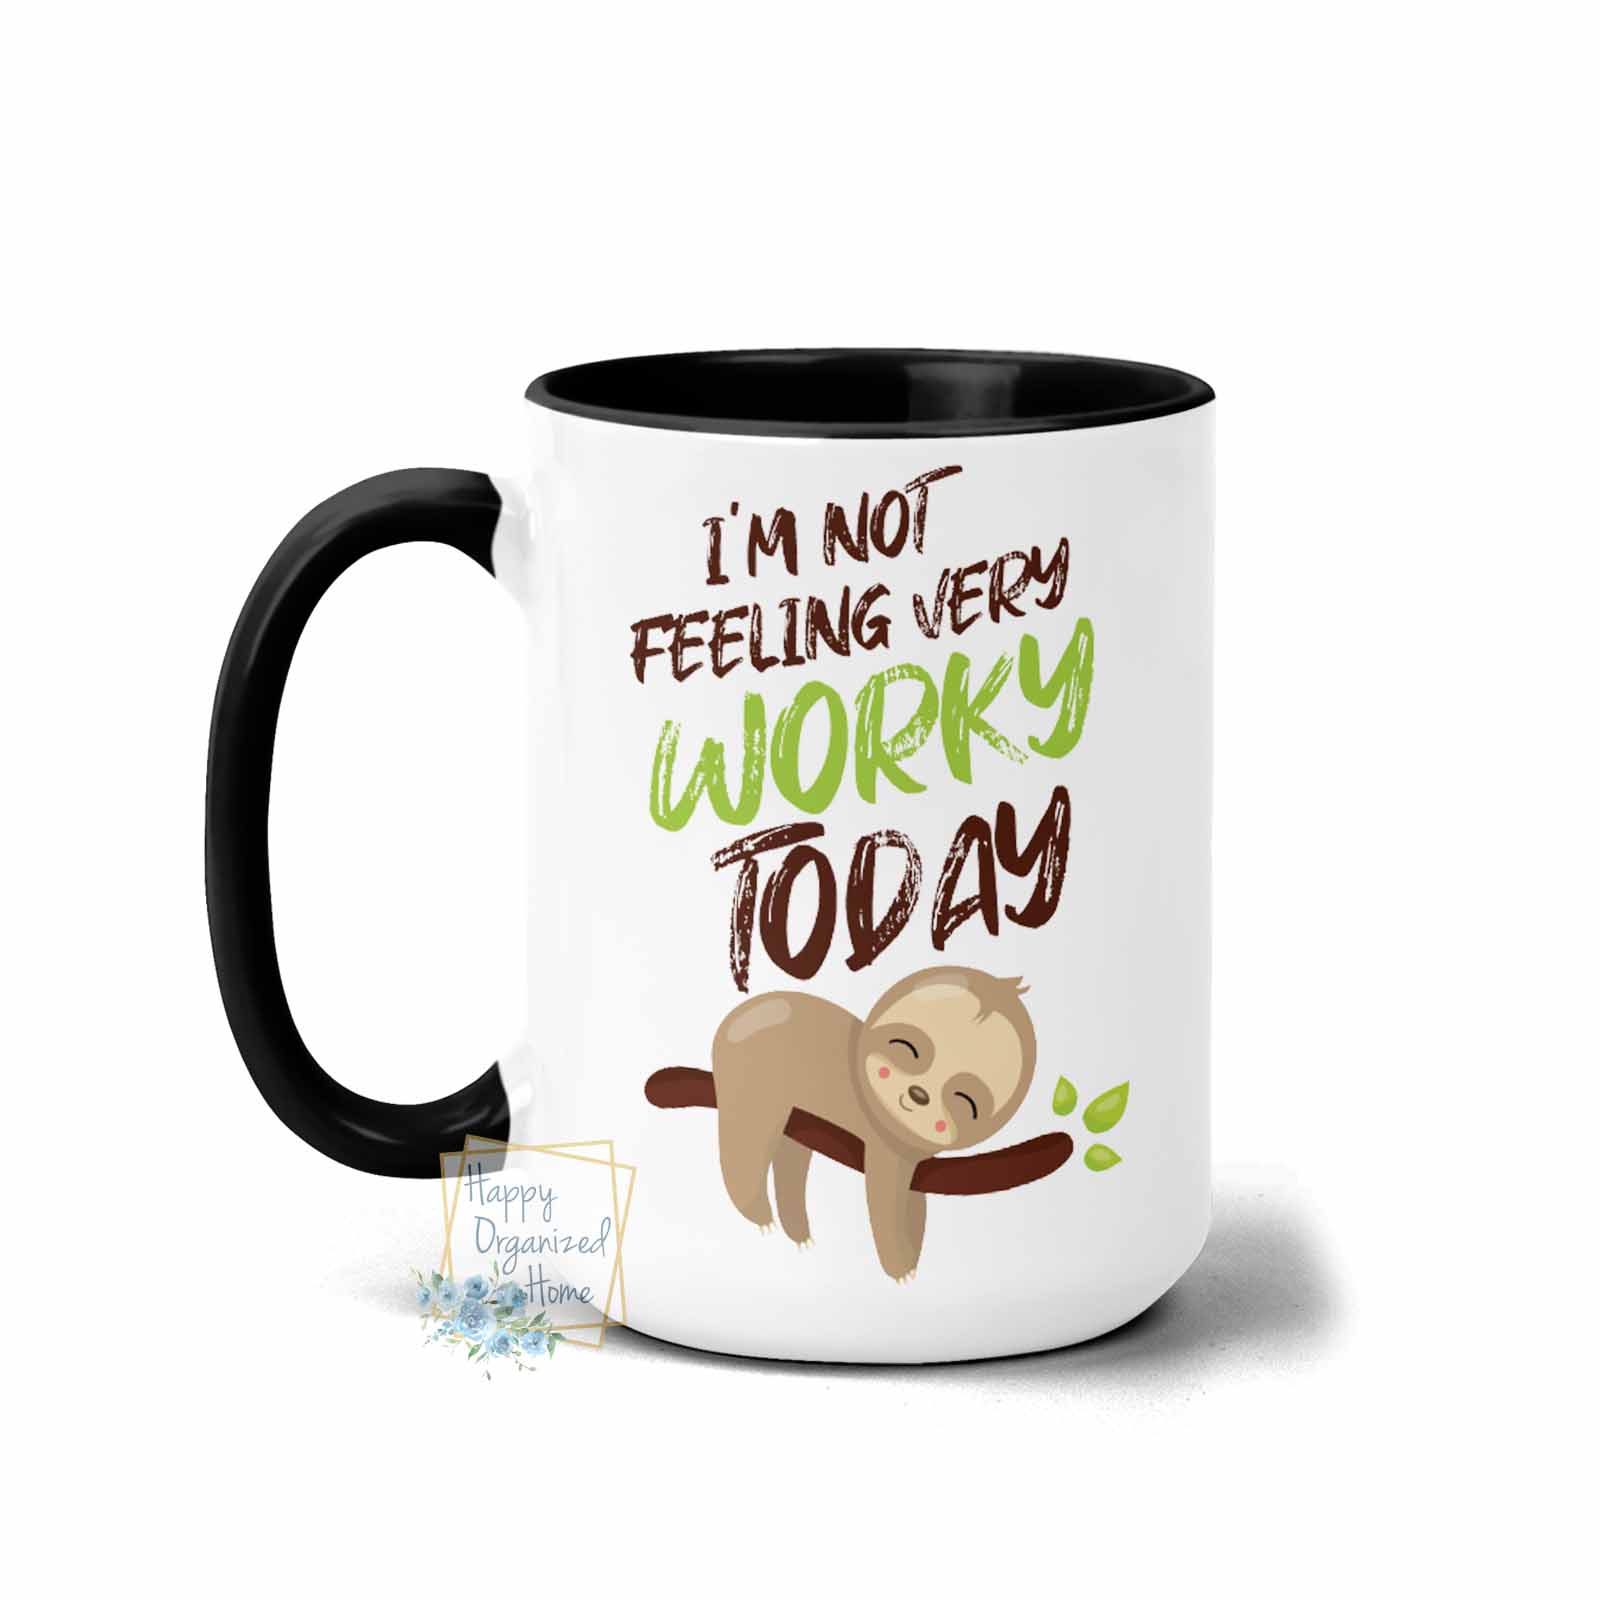 I'm not feeling very worky today - Coffee Mug  Tea Mug